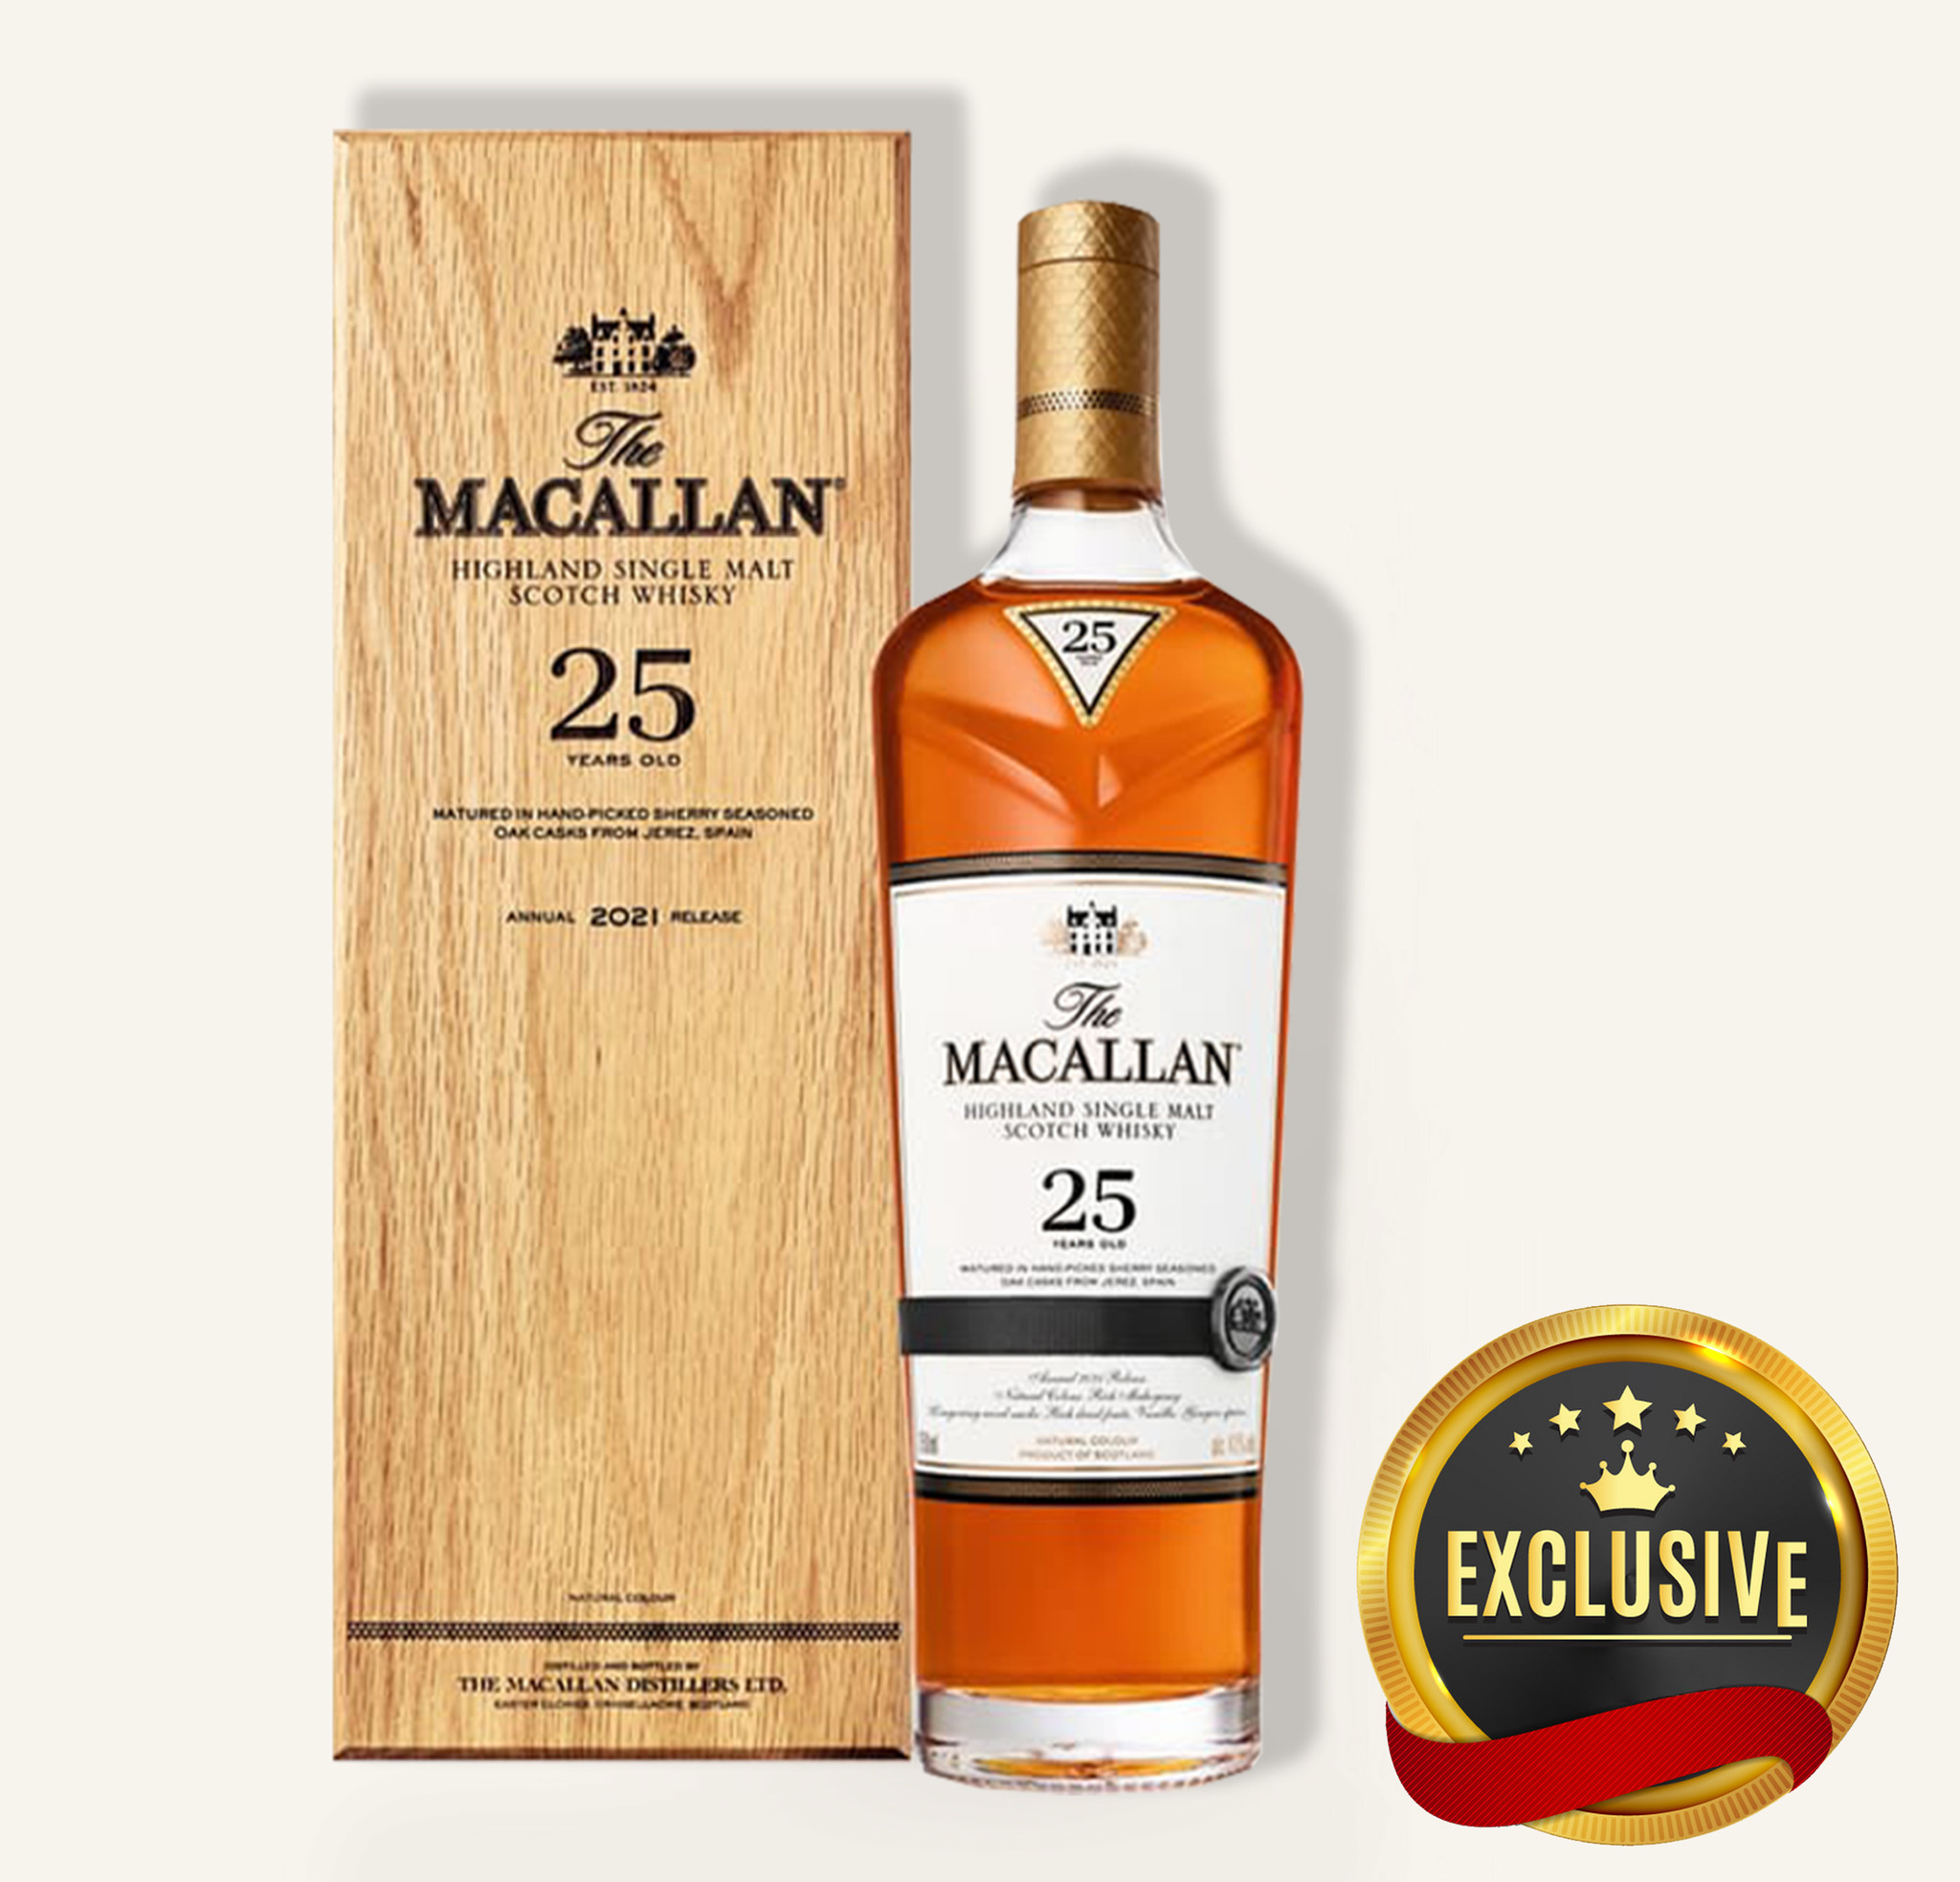 Macallan Harmony Collection Single Malt Scotch 750ml – BevMo!